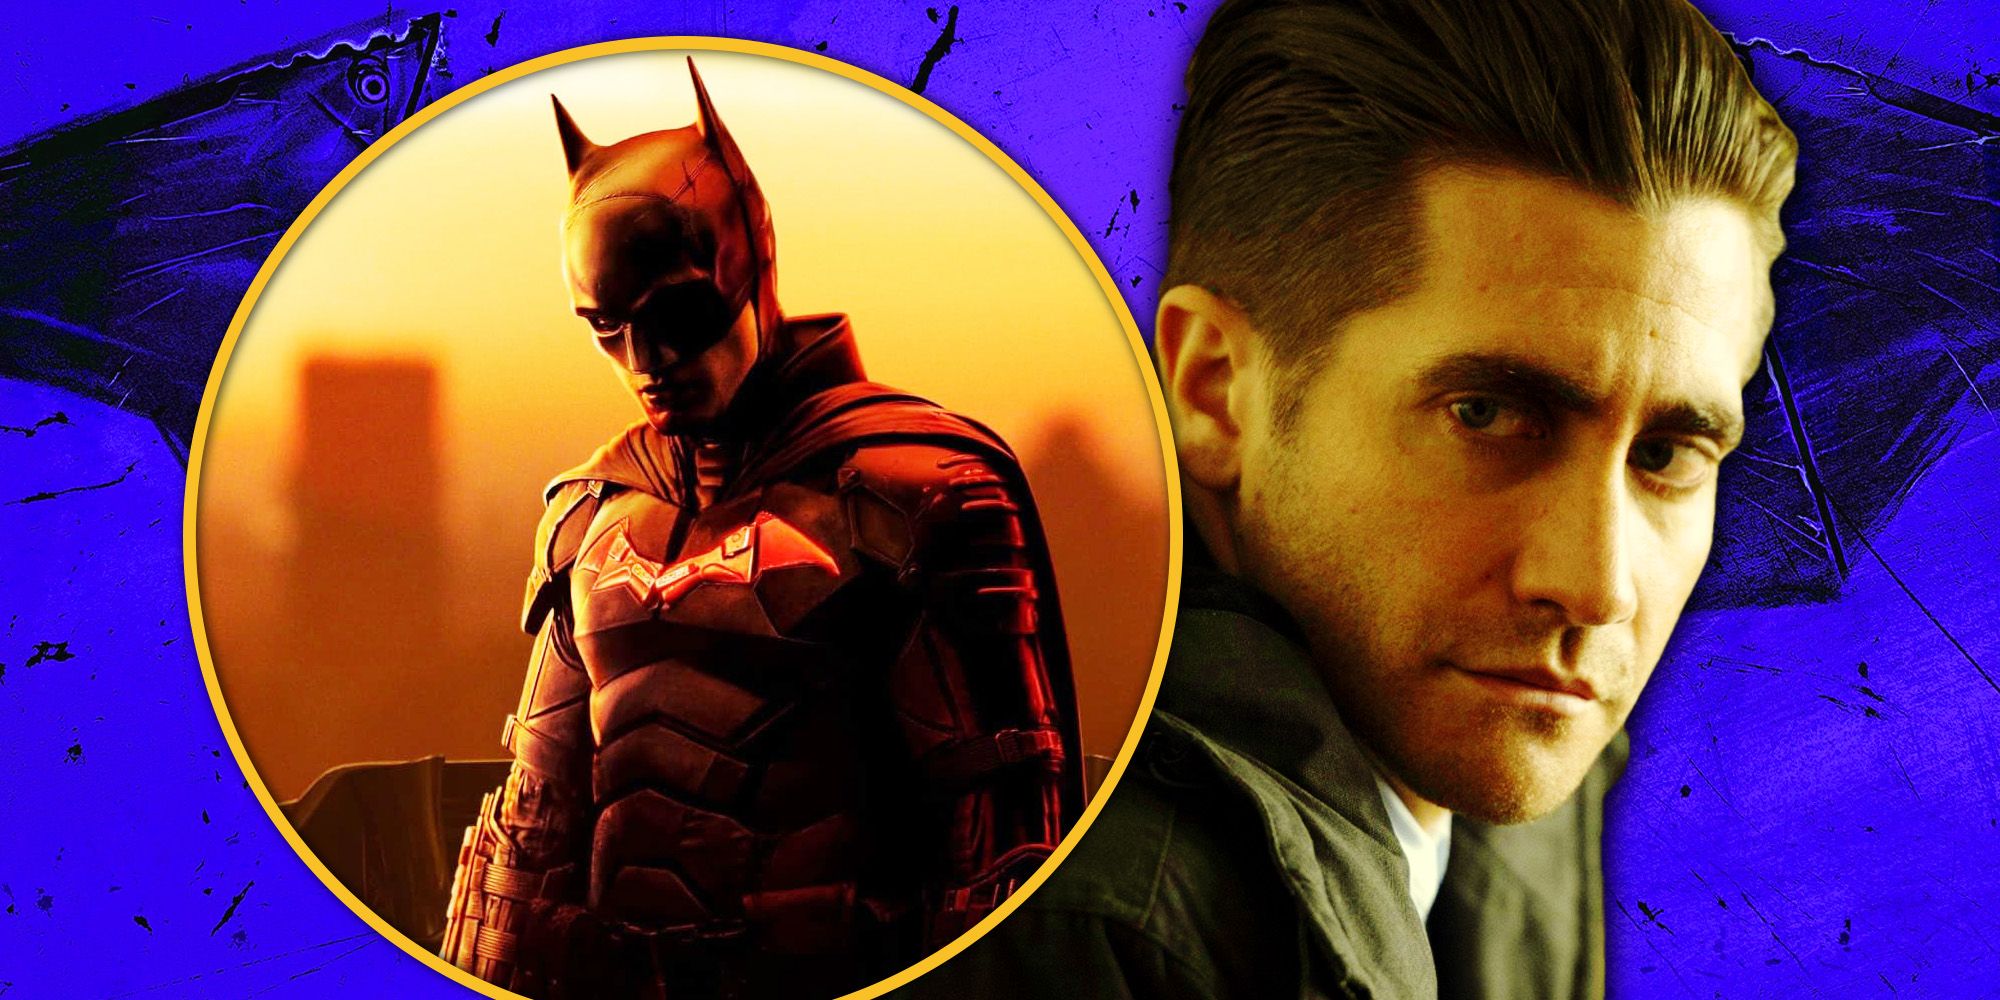 Jake Gyllenhaal looking intense in Prisoners with and Robert Pattinson's Batman